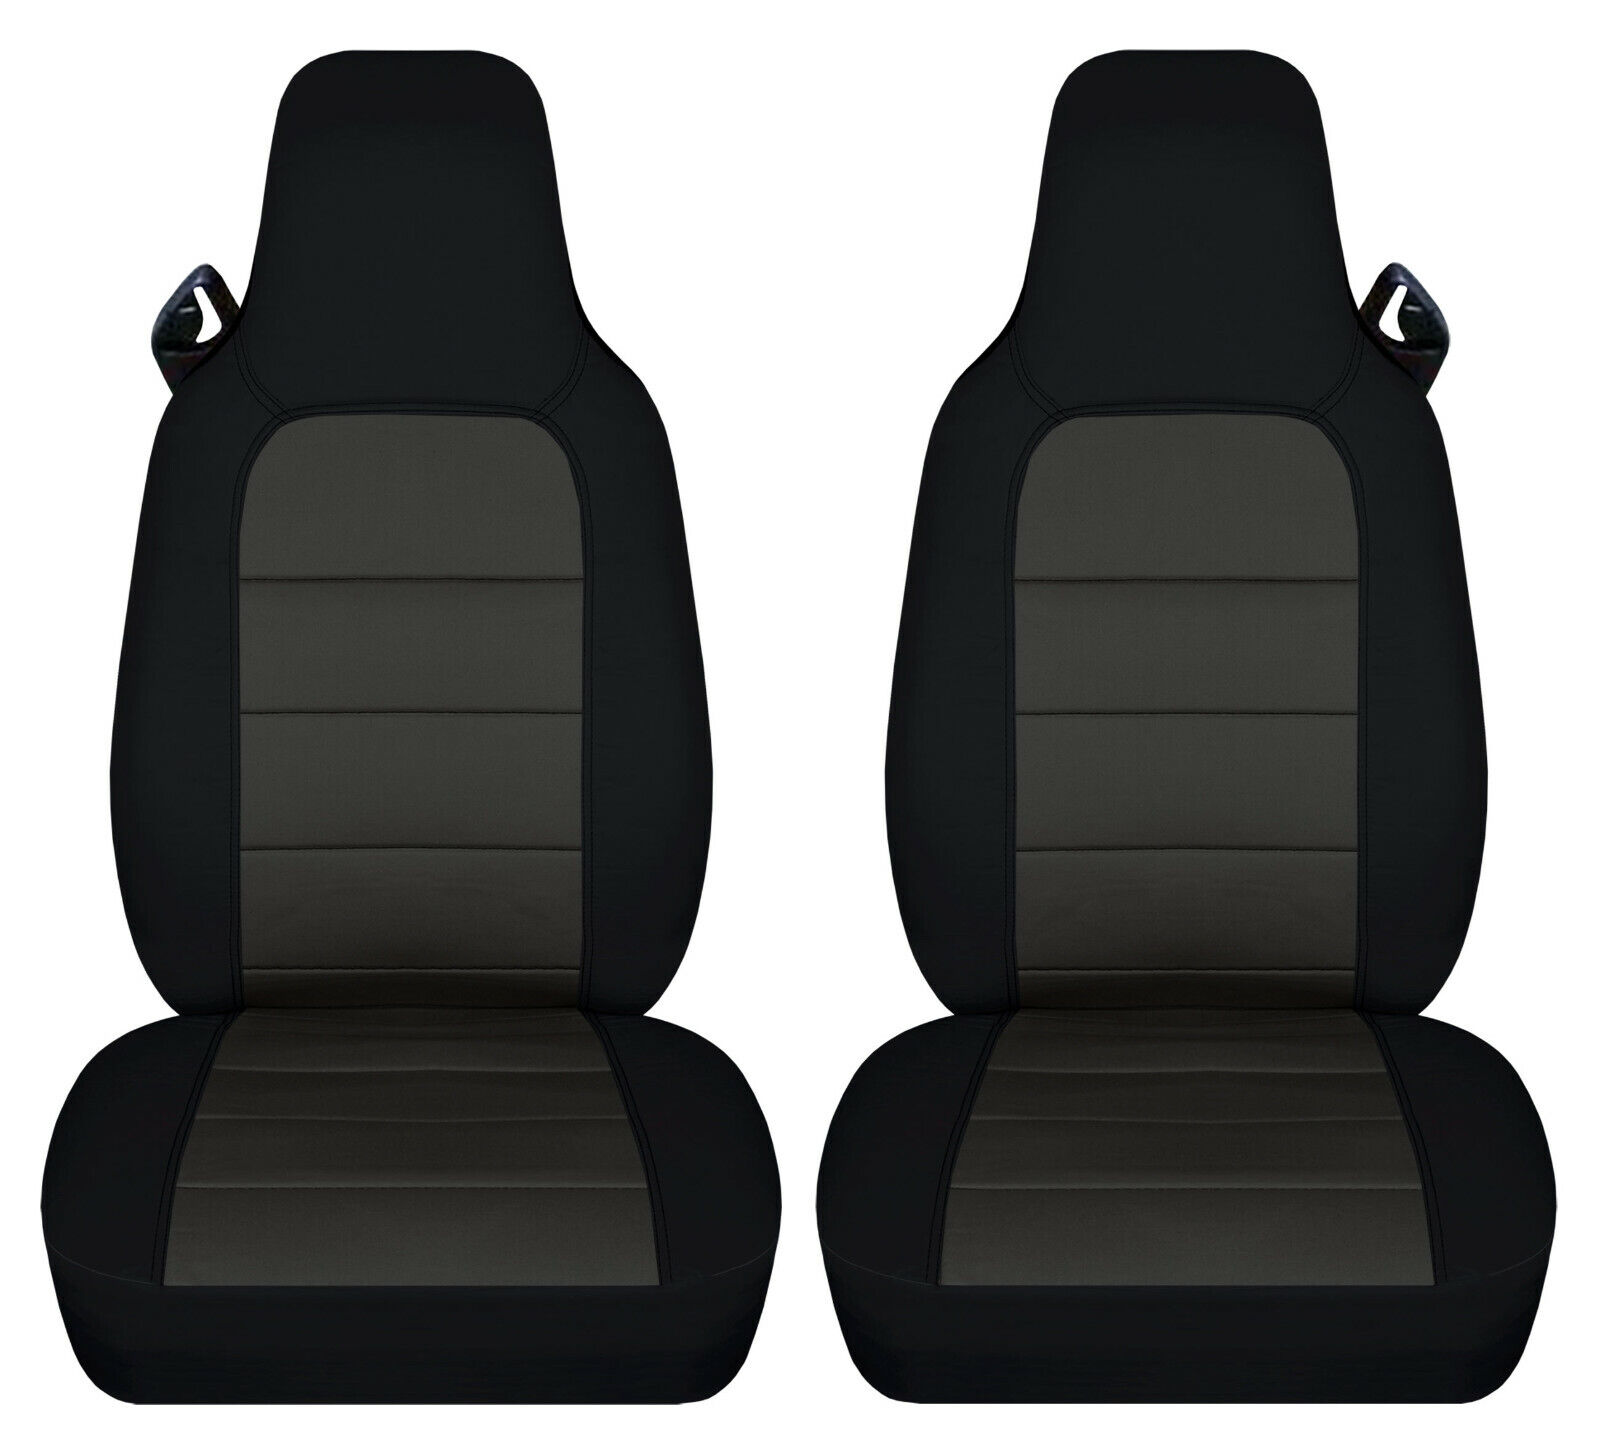 Designcovers fits 2006-2016 Mazda Miata/MX-5 car seat covers blk-red/tan/silver.